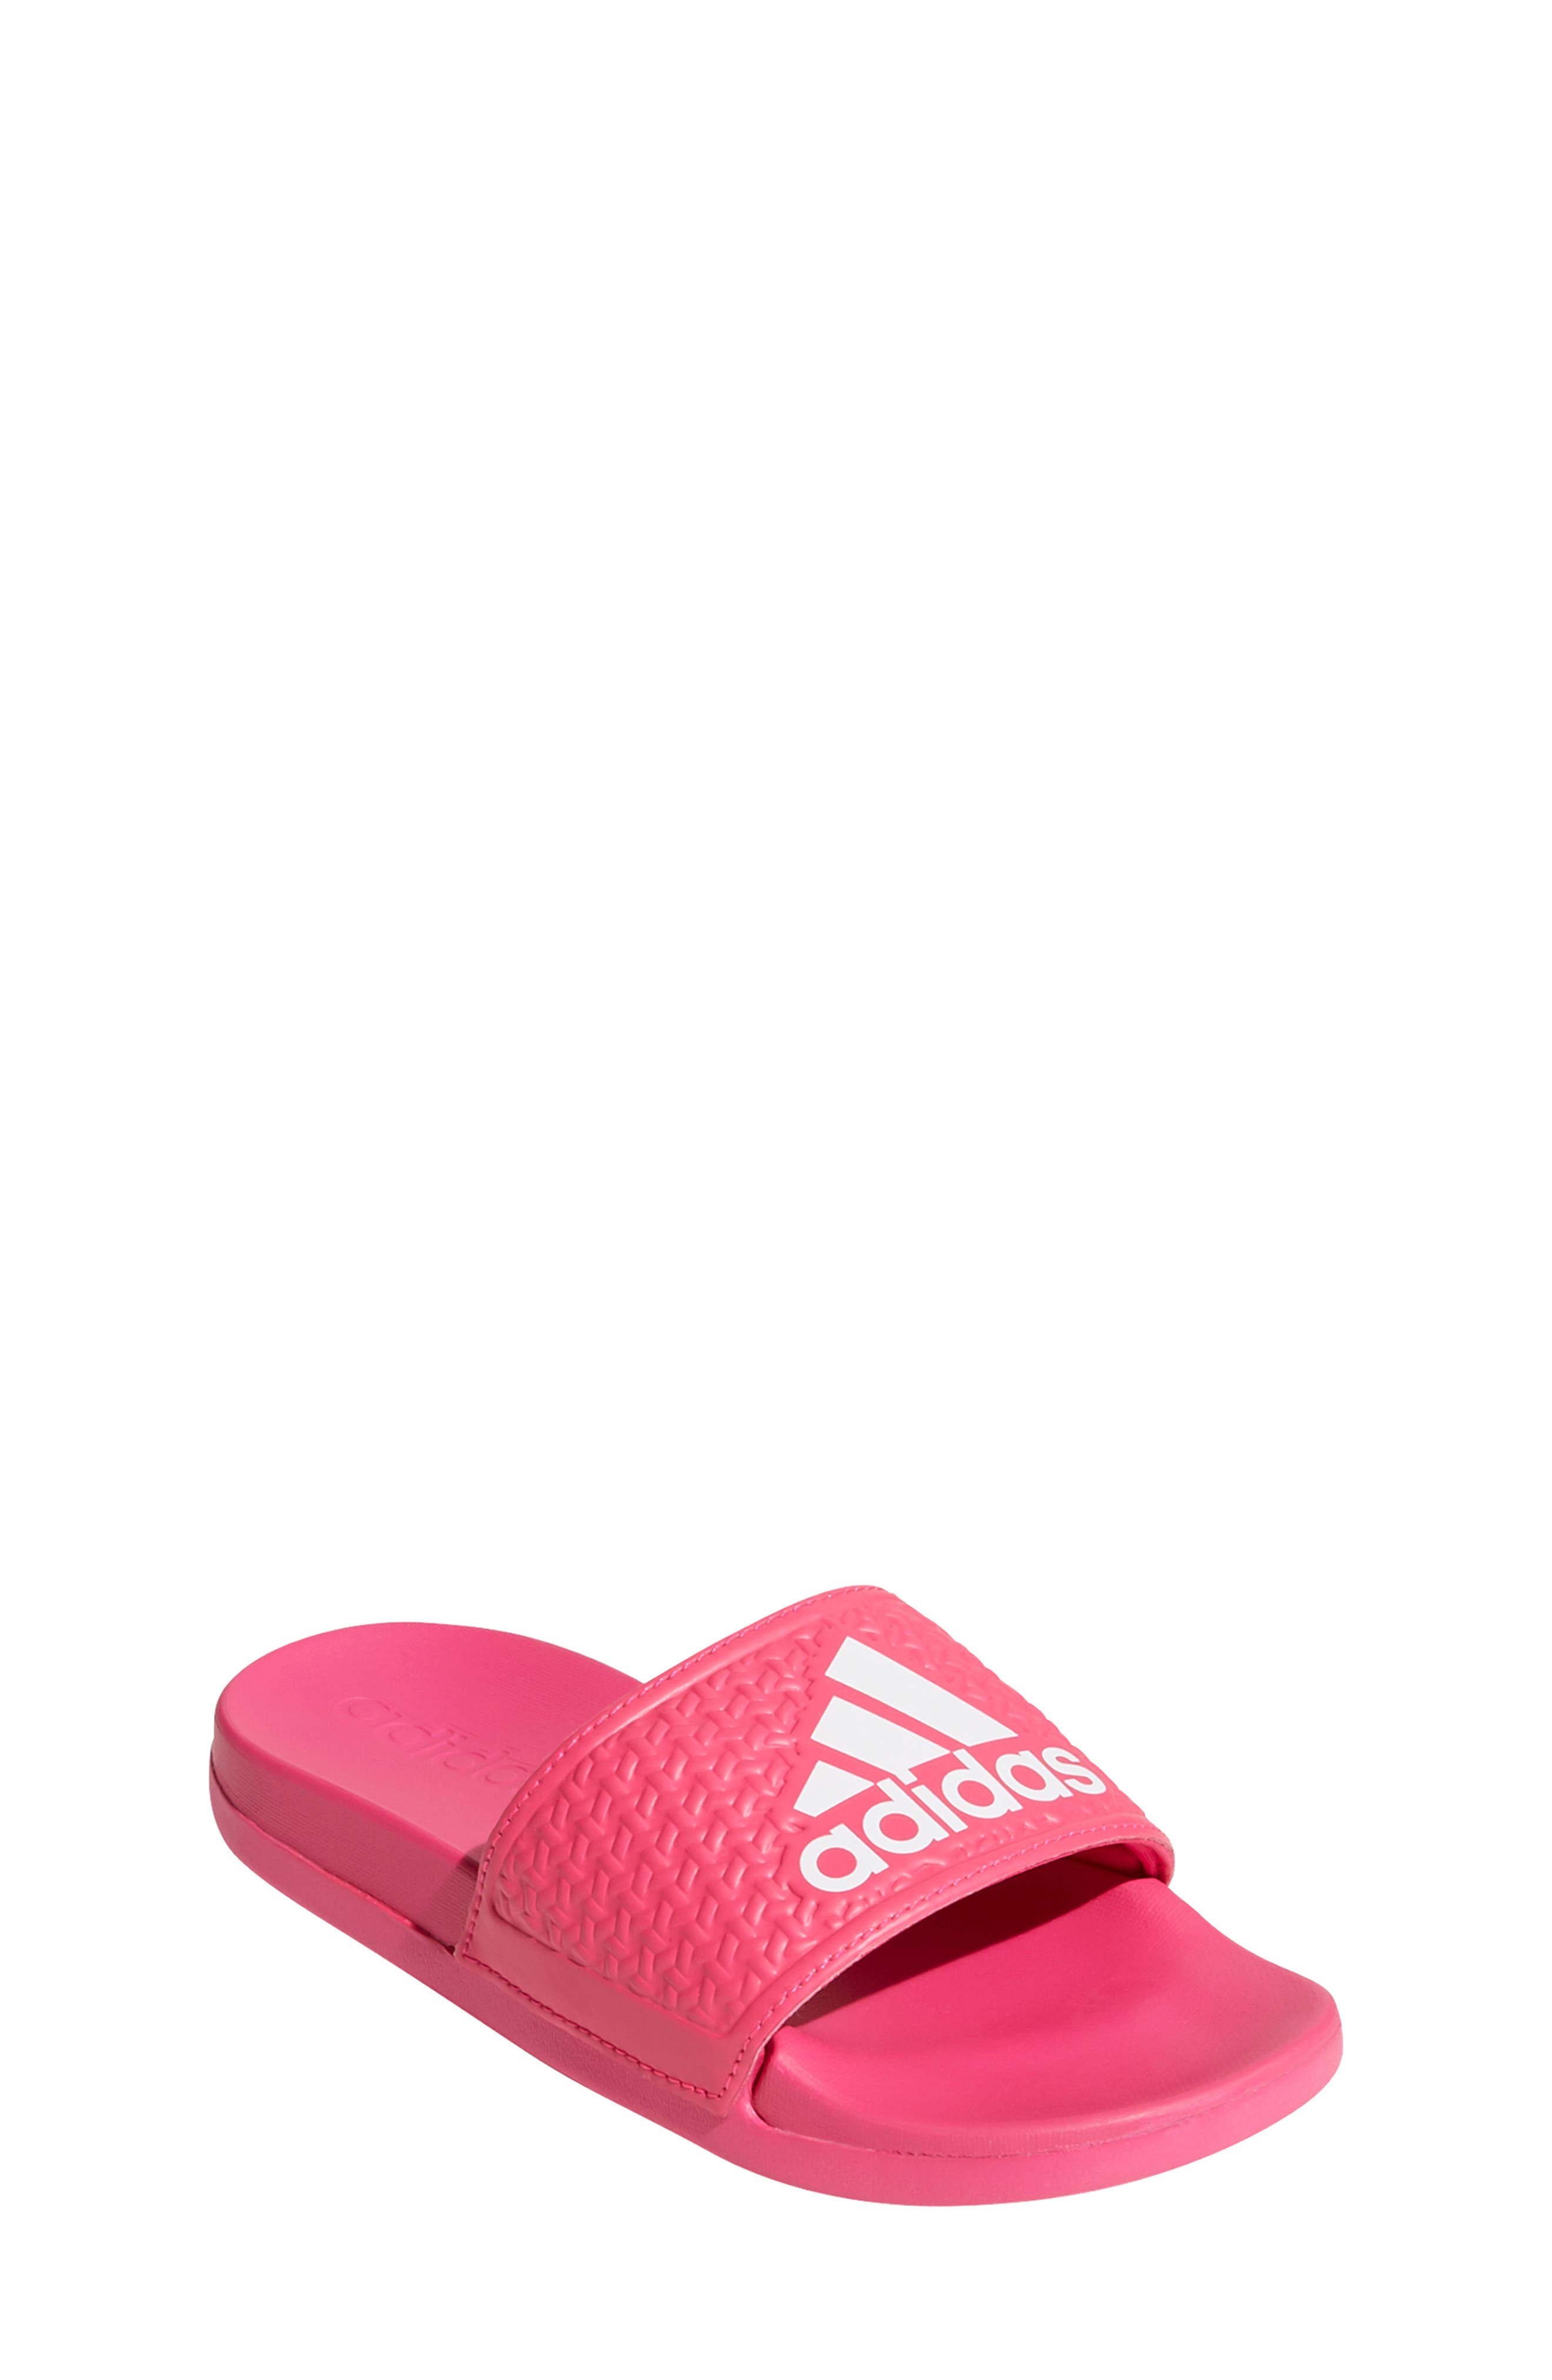 adidas girls flip flops